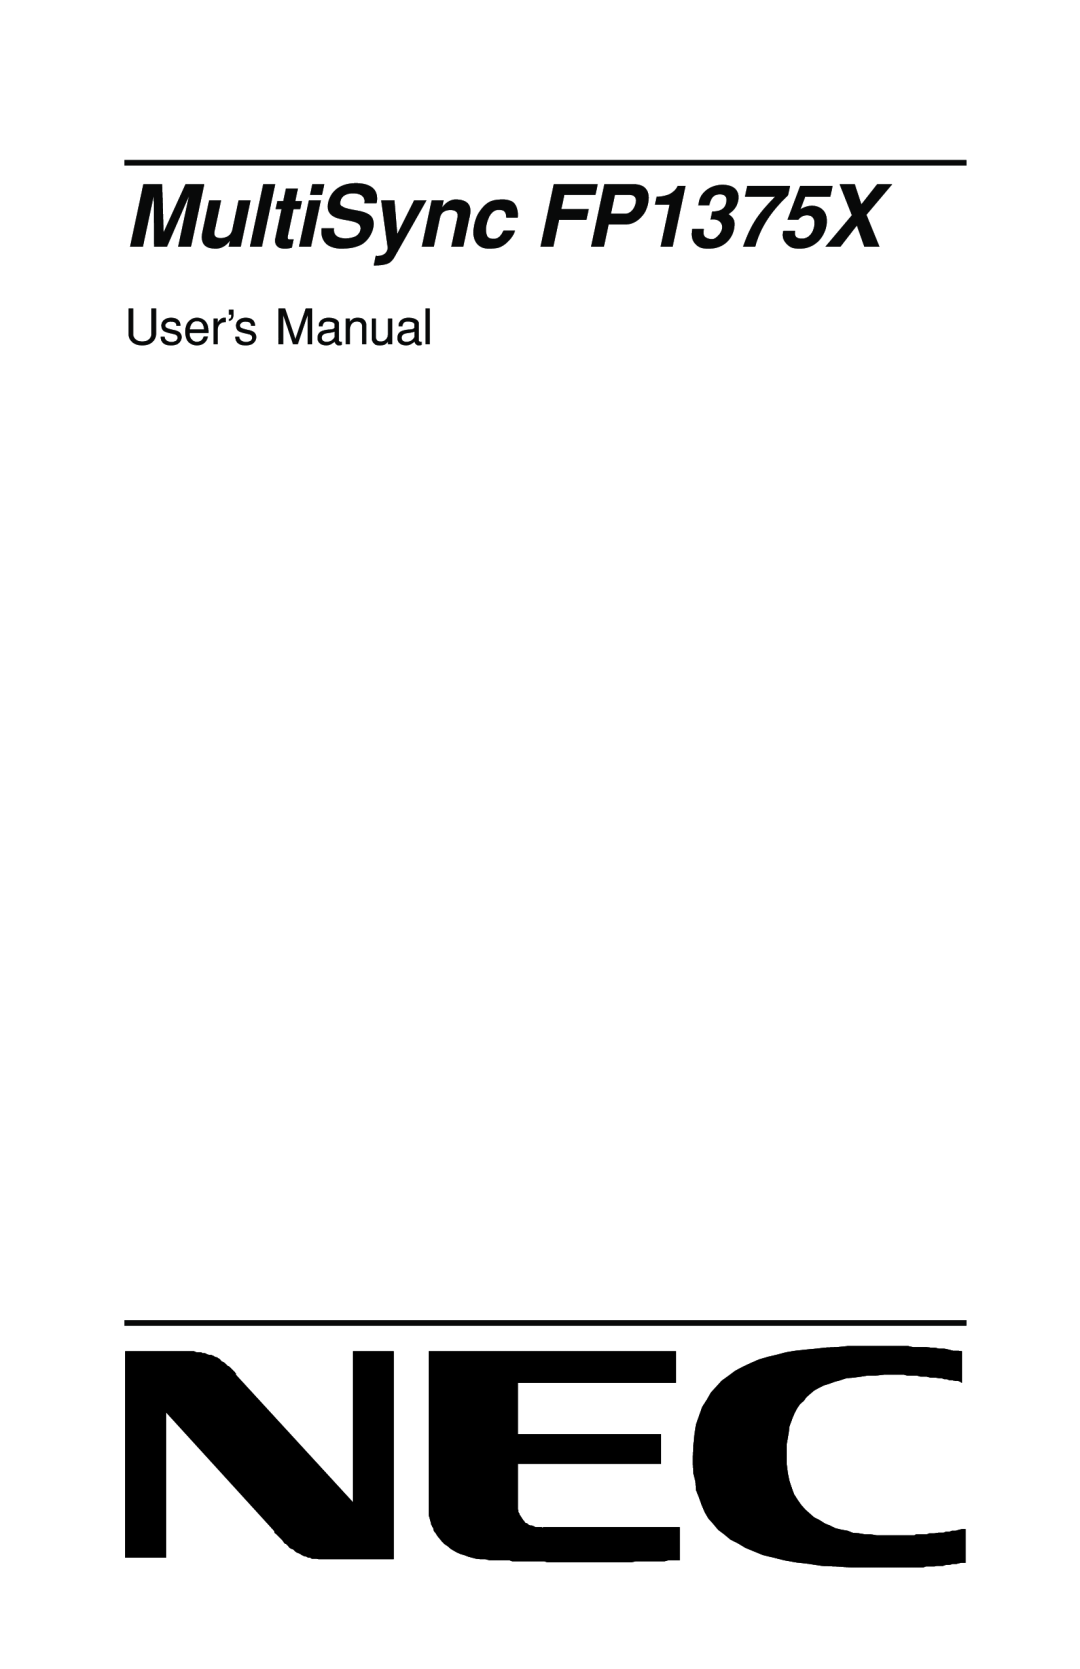 NEC user manual MultiSync FP1375X, User’s Manual 